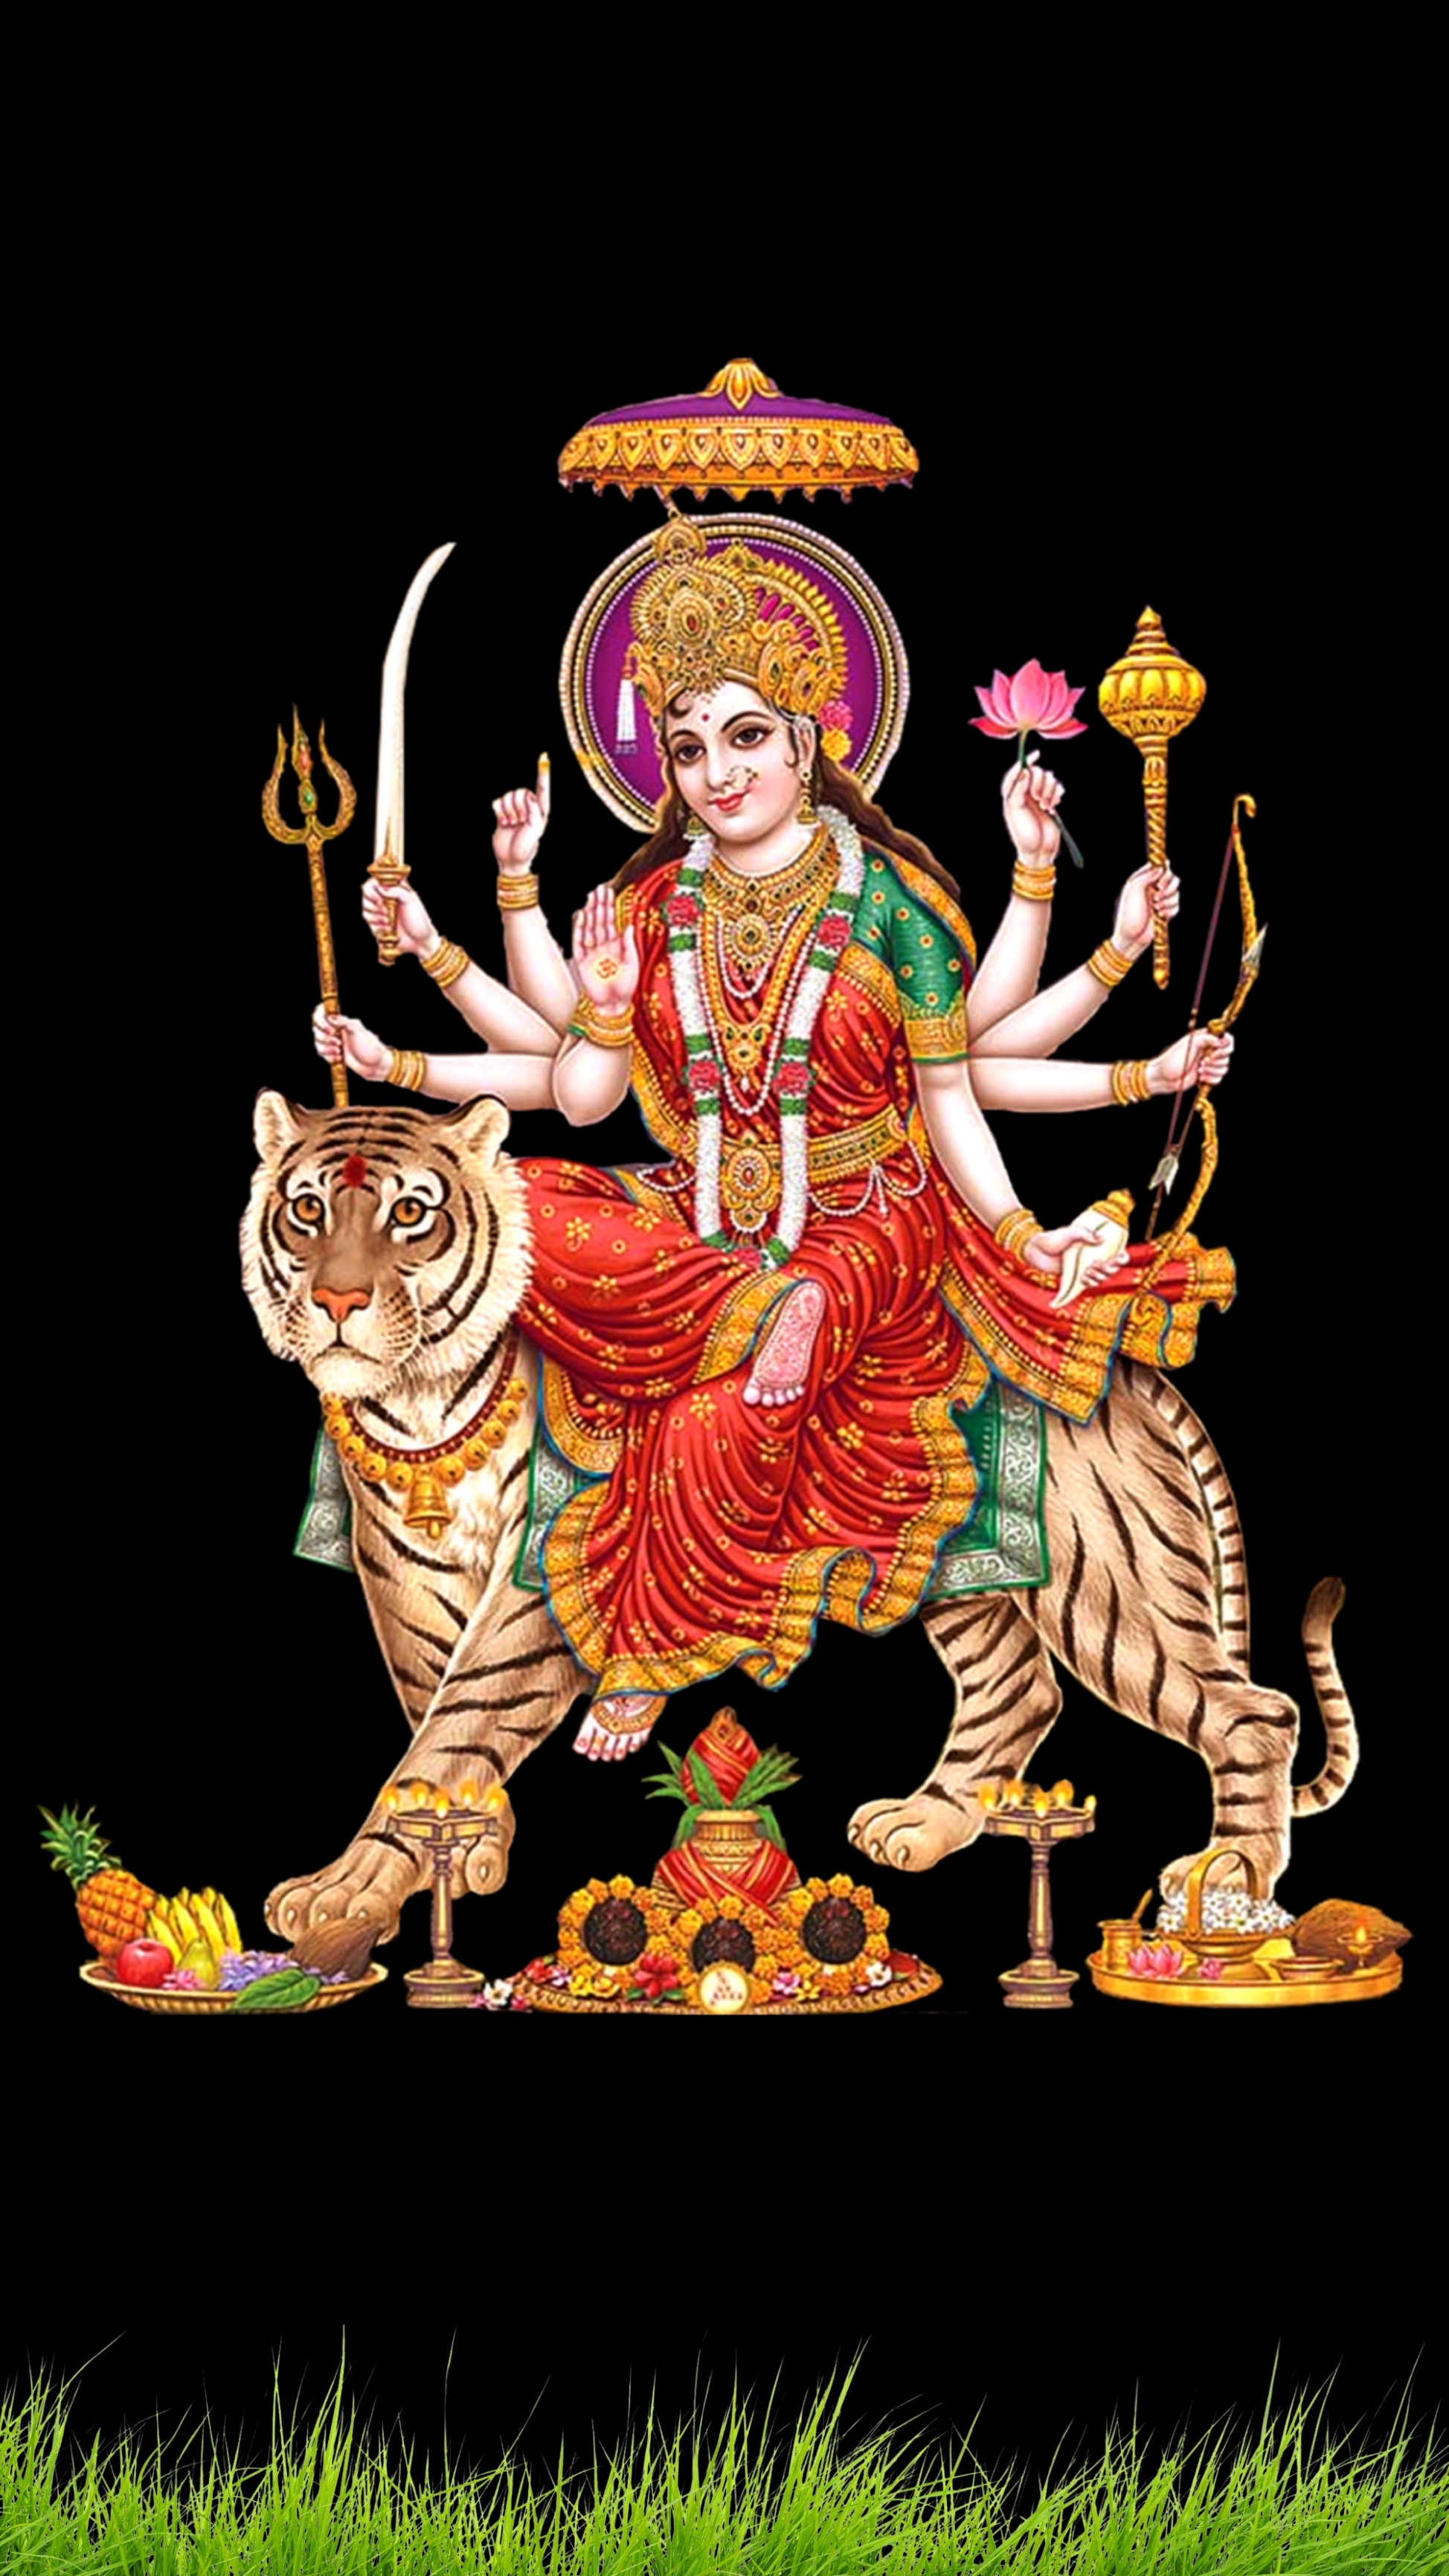 माँ दुर्गा मोबाइल वॉलपेपर HD 2020 | New Maa Durga Wallpaper Mobile | Durga  ji wallpapers | durga ji ki photo